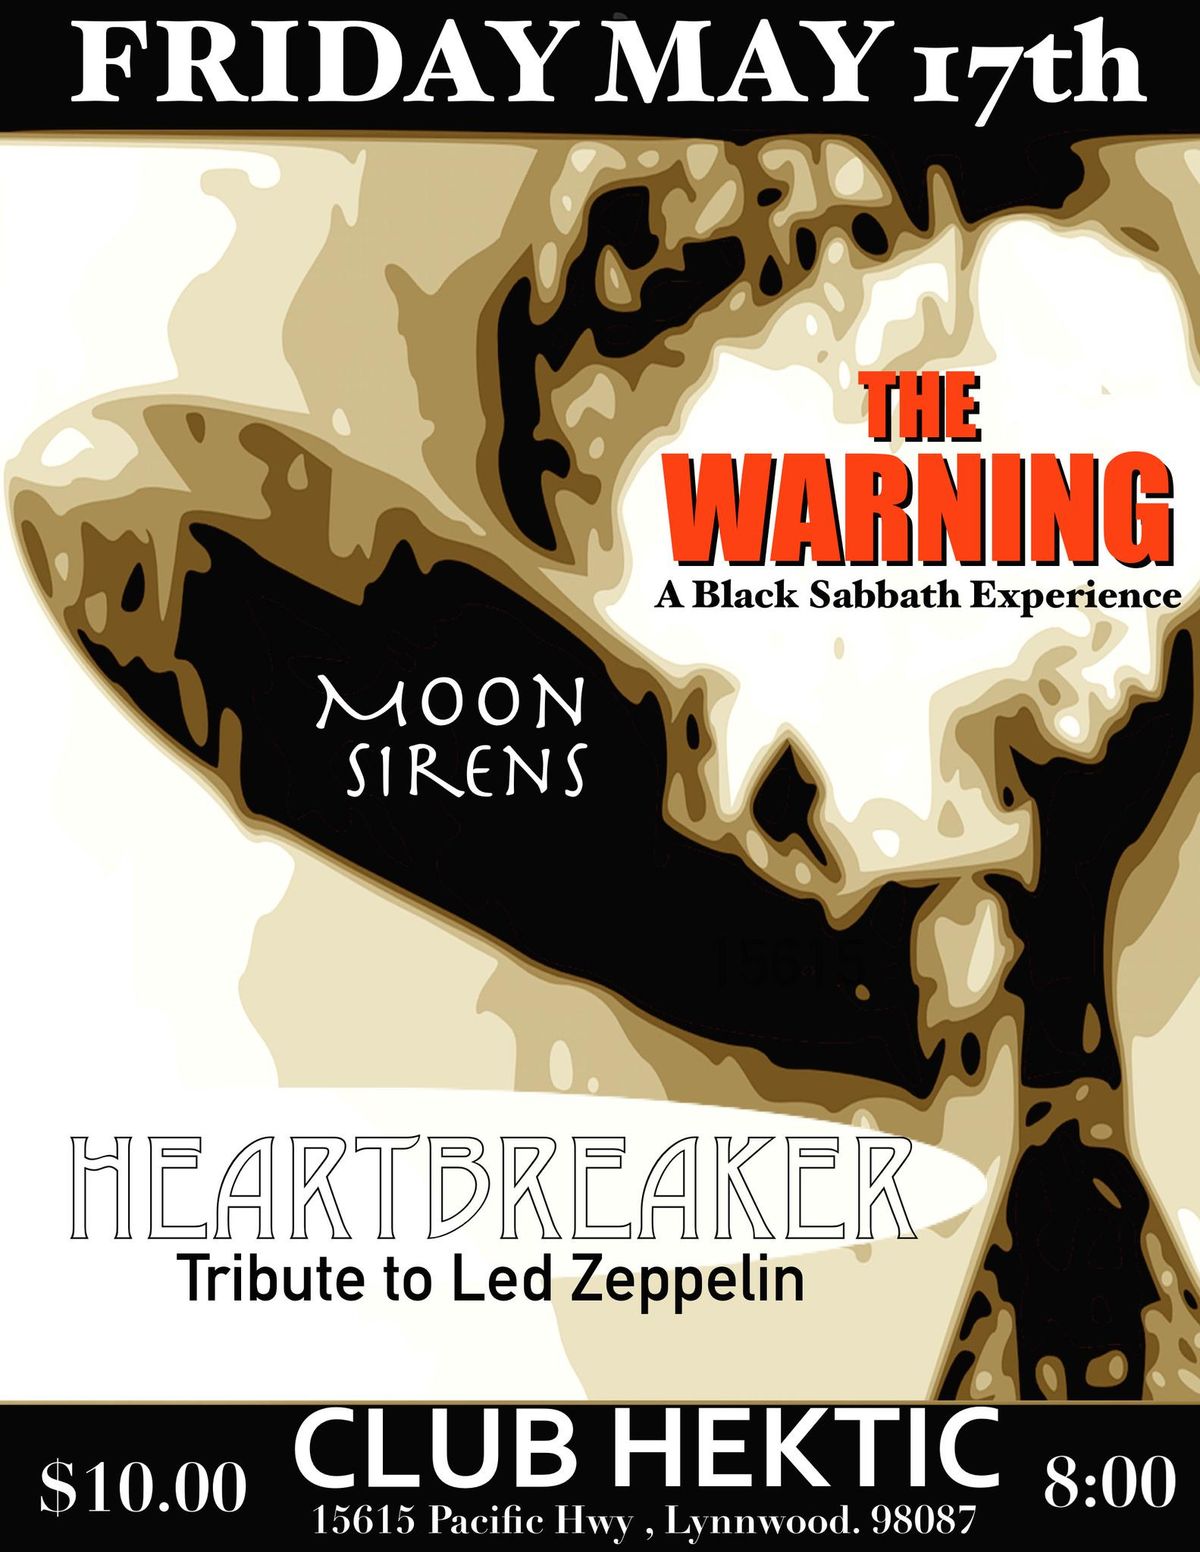 The Warning: A Black Sabbath Experience, MOON SIRENS, HEARTBREAKER at CLUB HEKTIC!